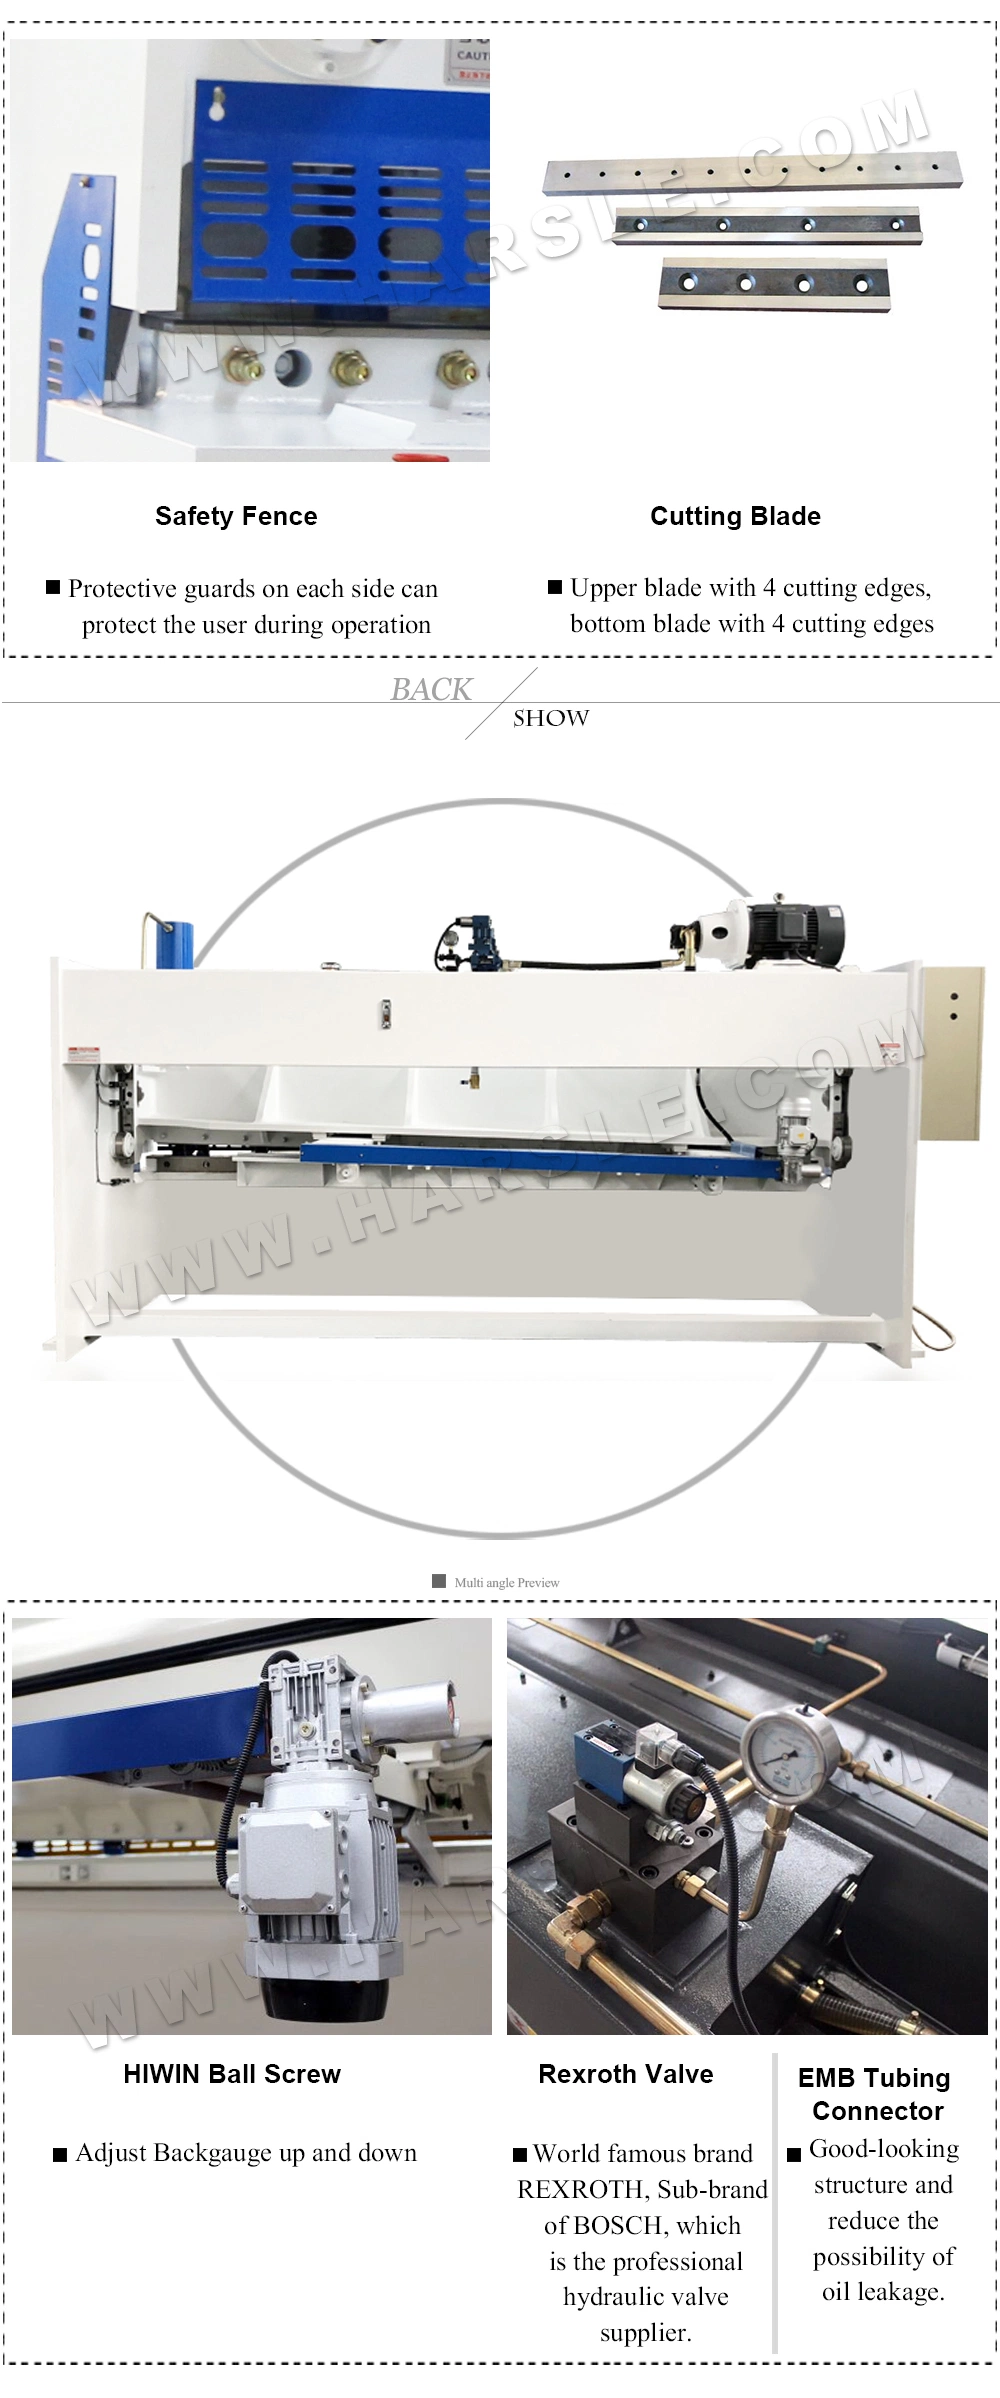 China Harsle Hydraulic Guillotine Sheet Metal Shearing Machine QC11y 25*3200